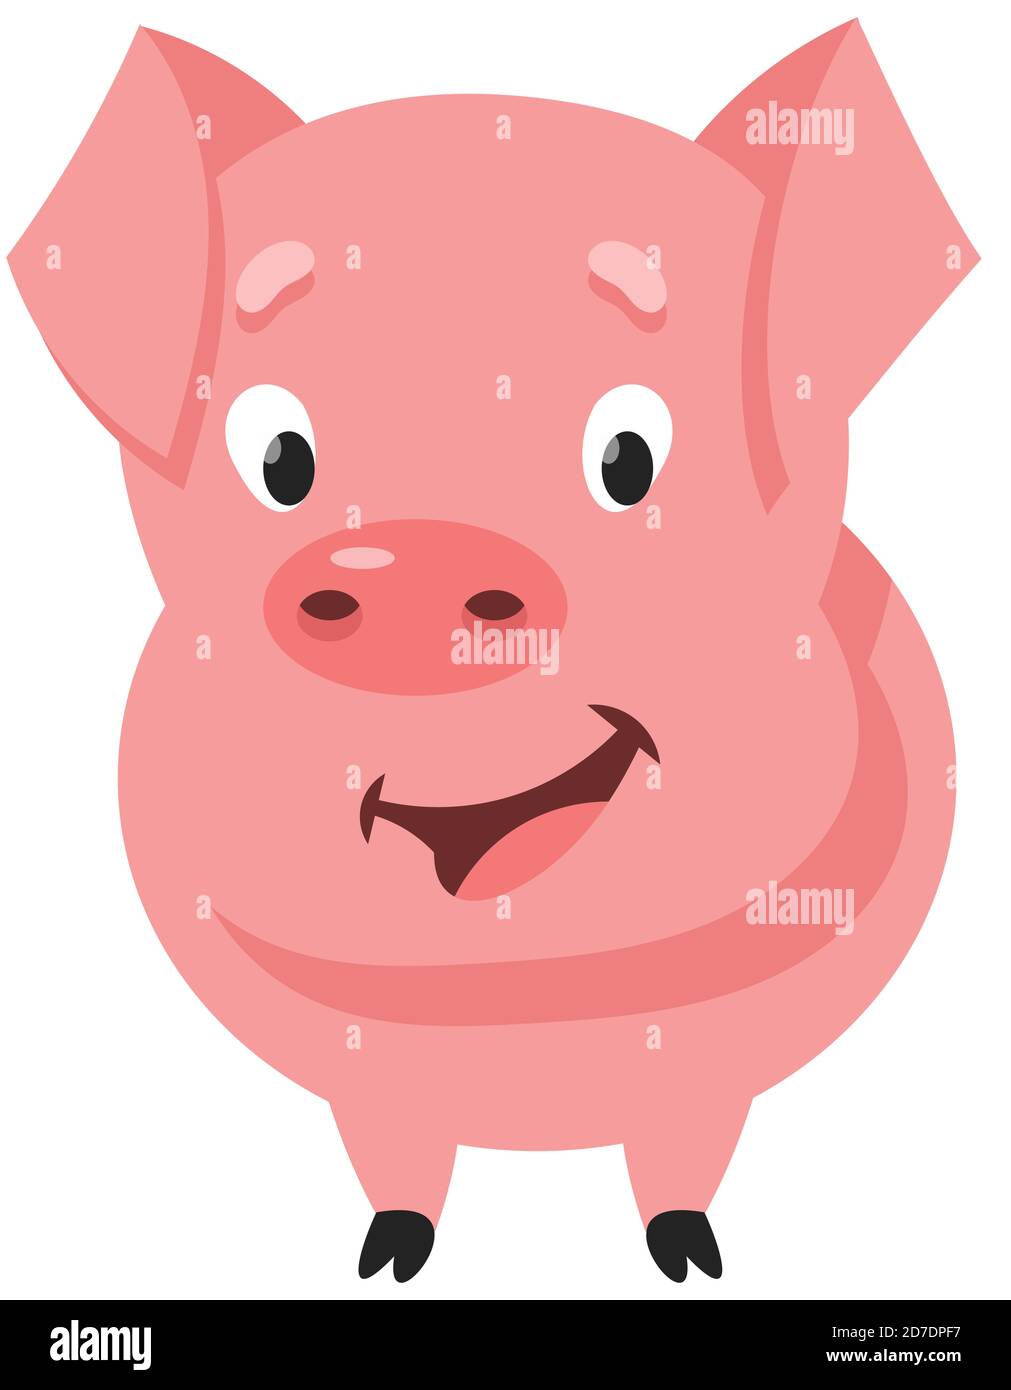 Standing cute little pig. Farm animal in cartoon style. Stock Vector